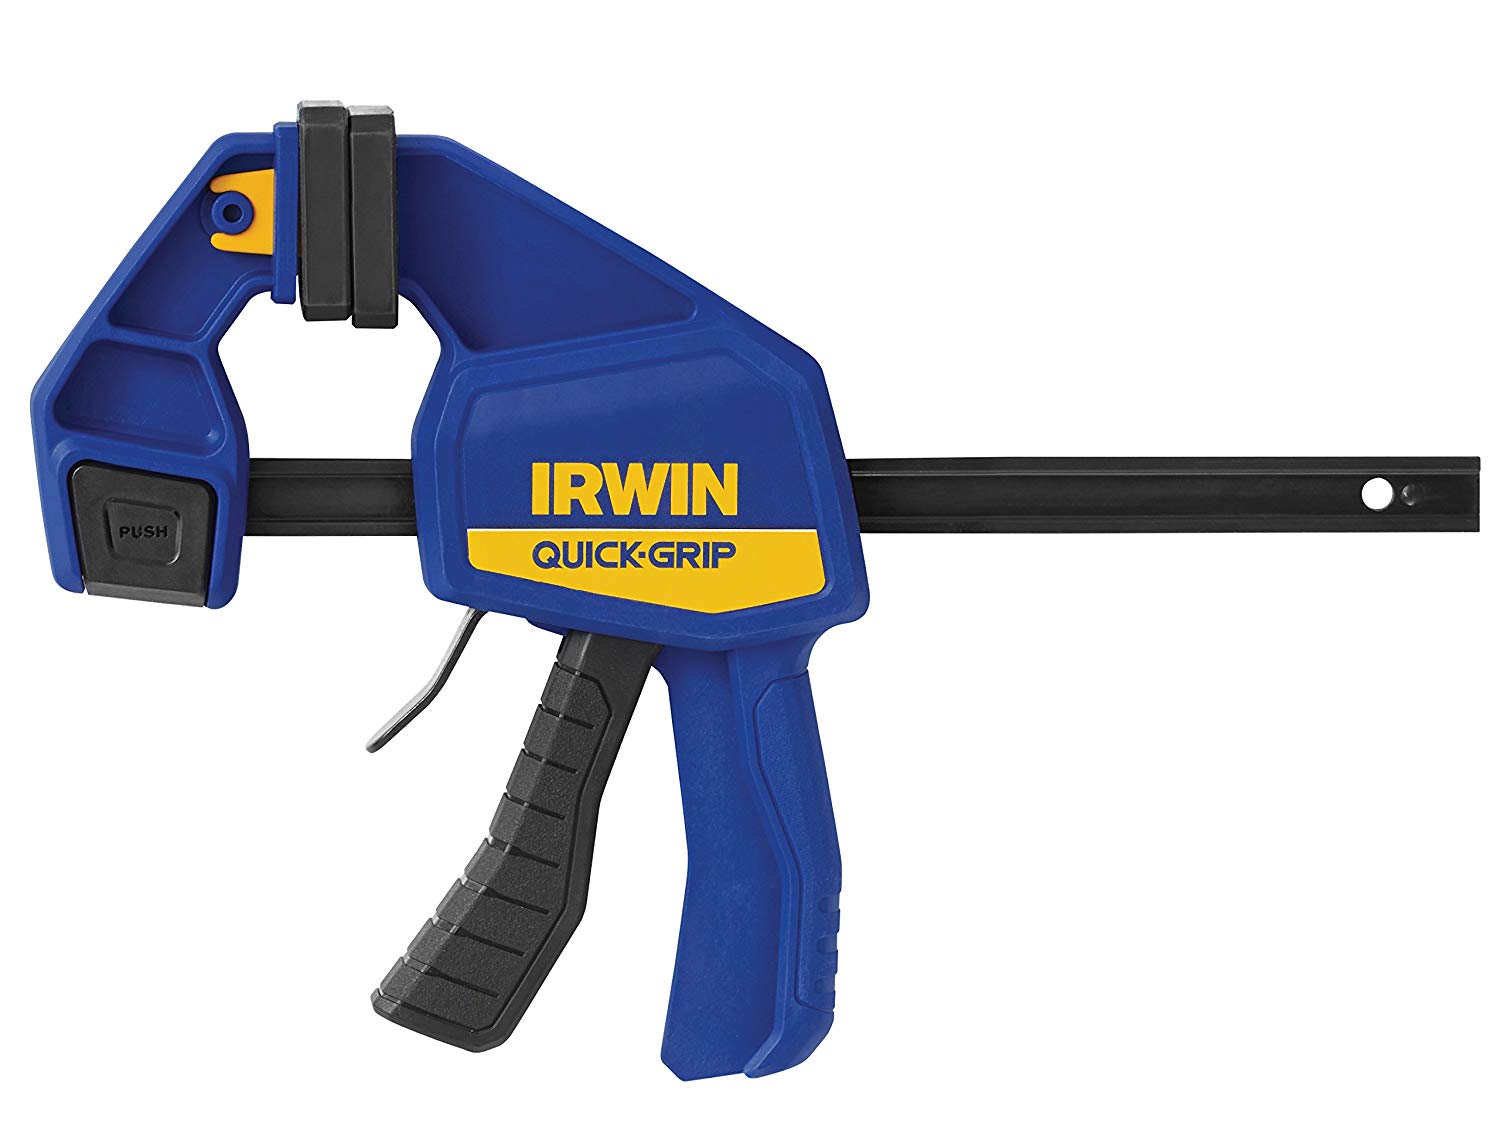 Black IRWIN IRWIN QUICK-GRIP XP36 900mm 36 Heavy-Duty Bar Clamp/Spreader 